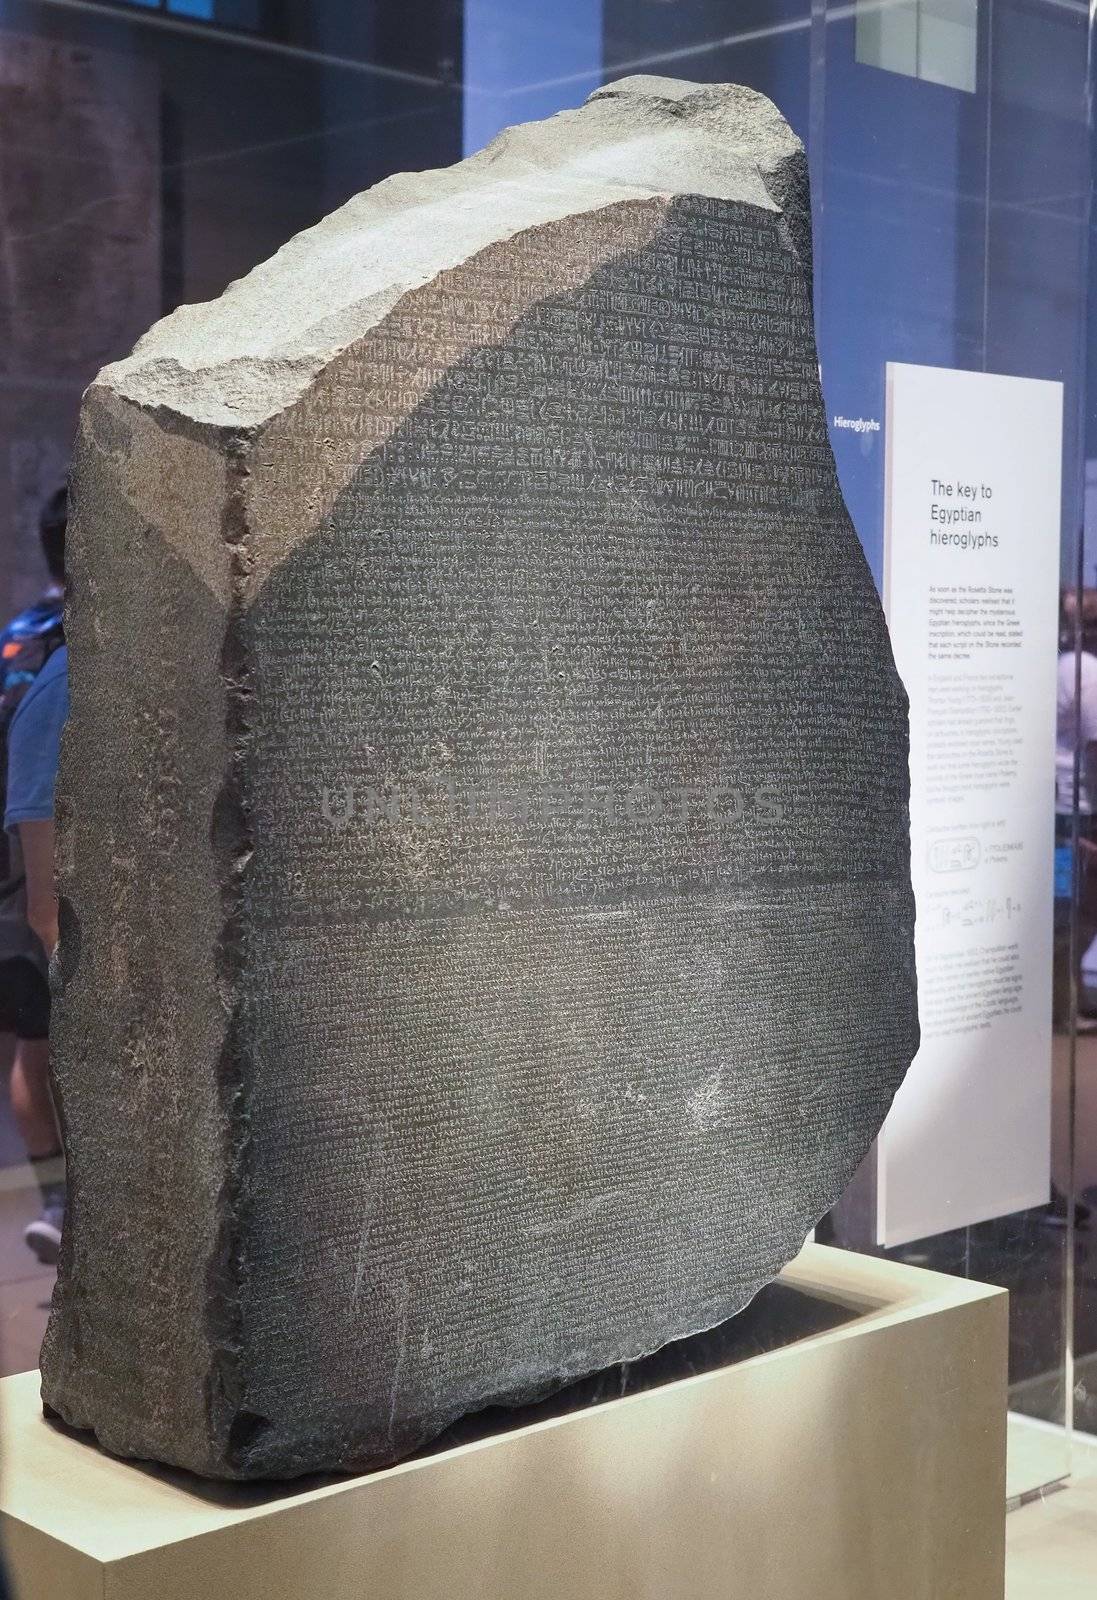 Rosetta Stone at British Museum in London by claudiodivizia